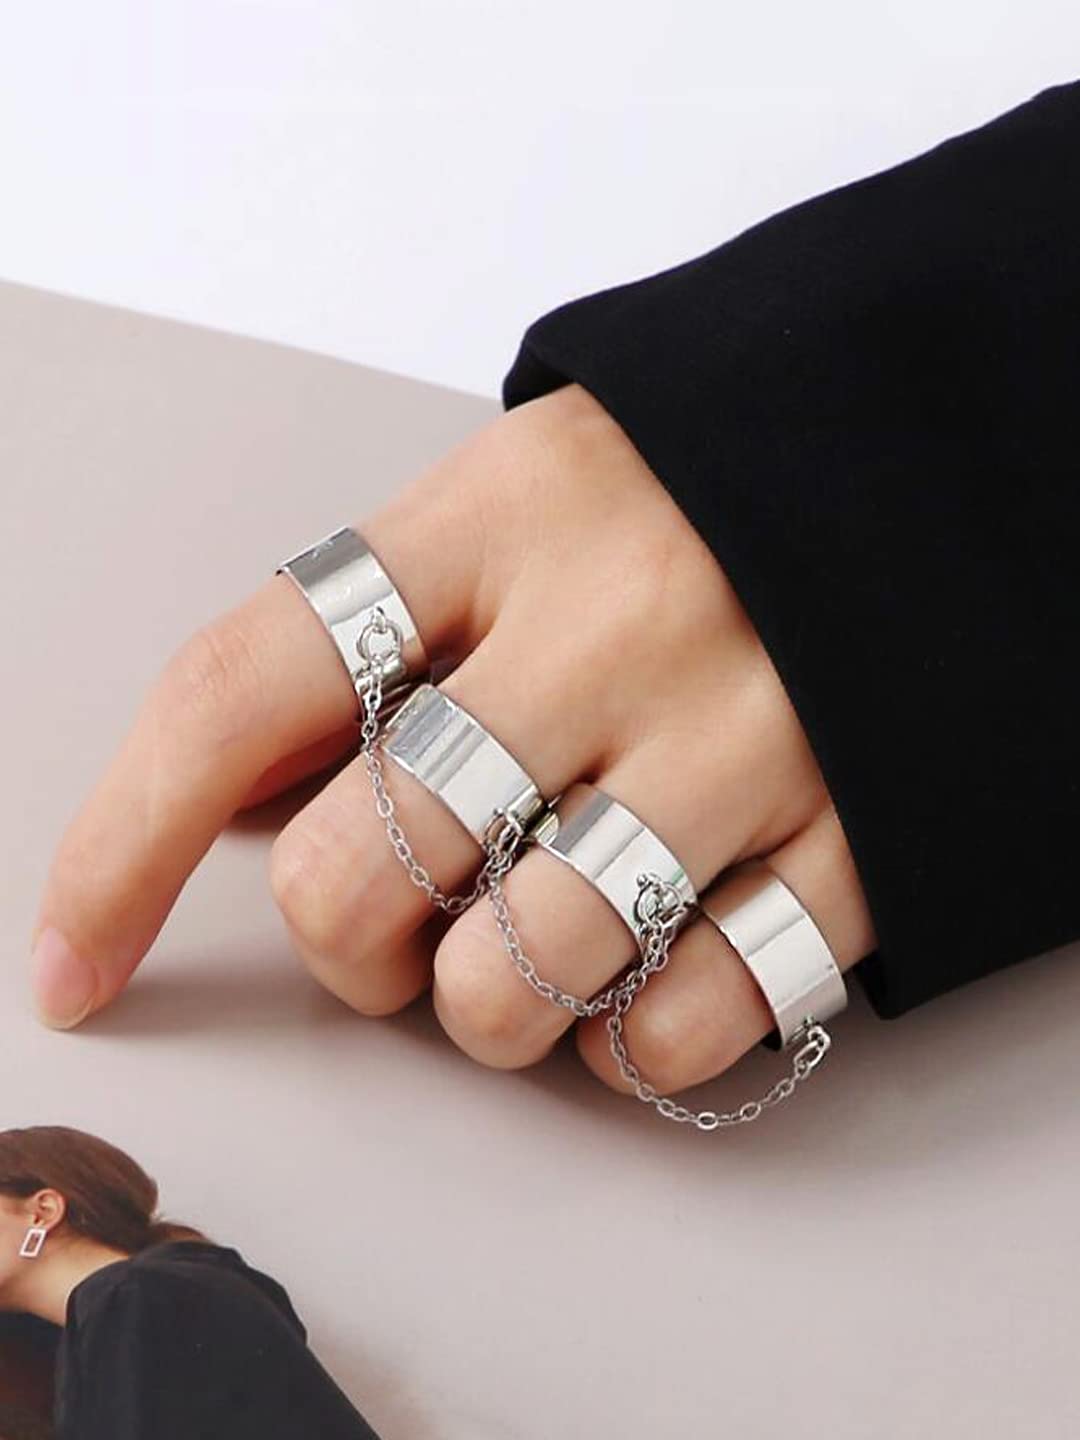 Stylish ring with gold polish and white diamond | Silveradda